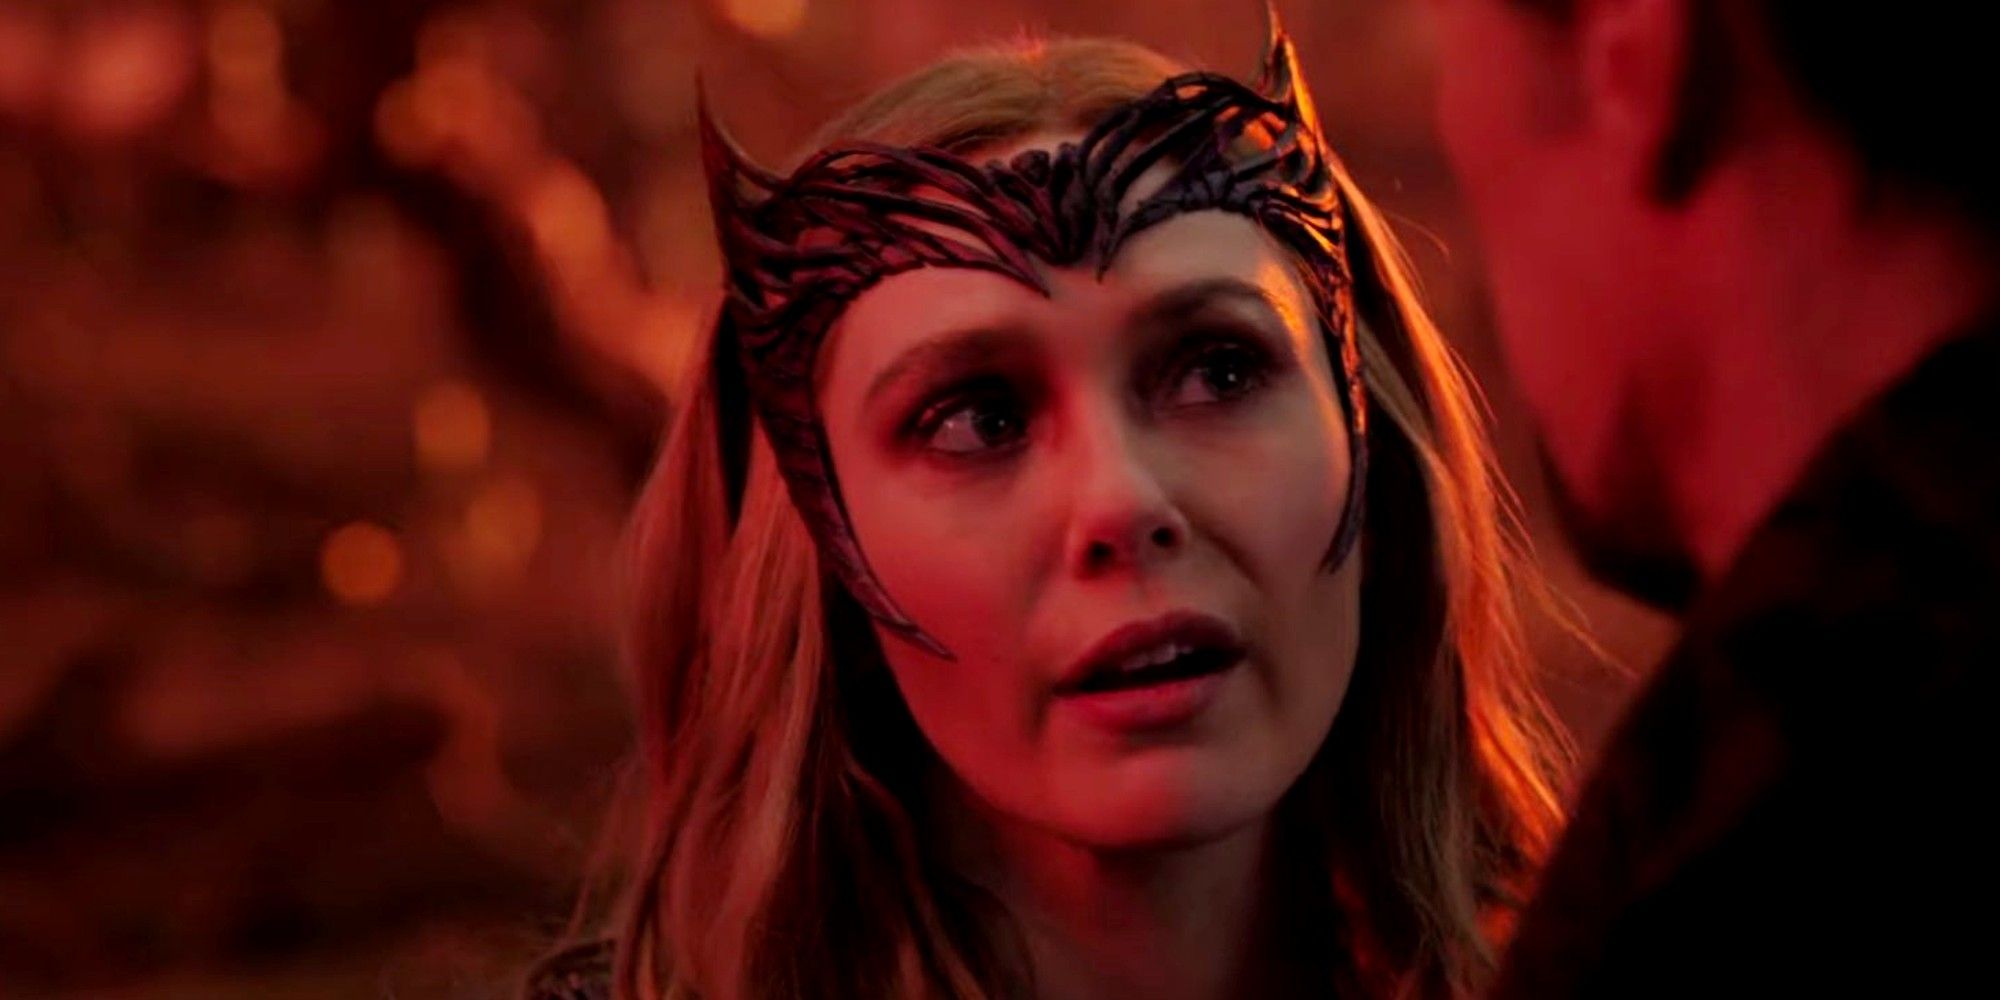 Doctor Strange In The Multiverse of Madness Elizabeth Olsen as Wanda Maximoff Scarlet Witch